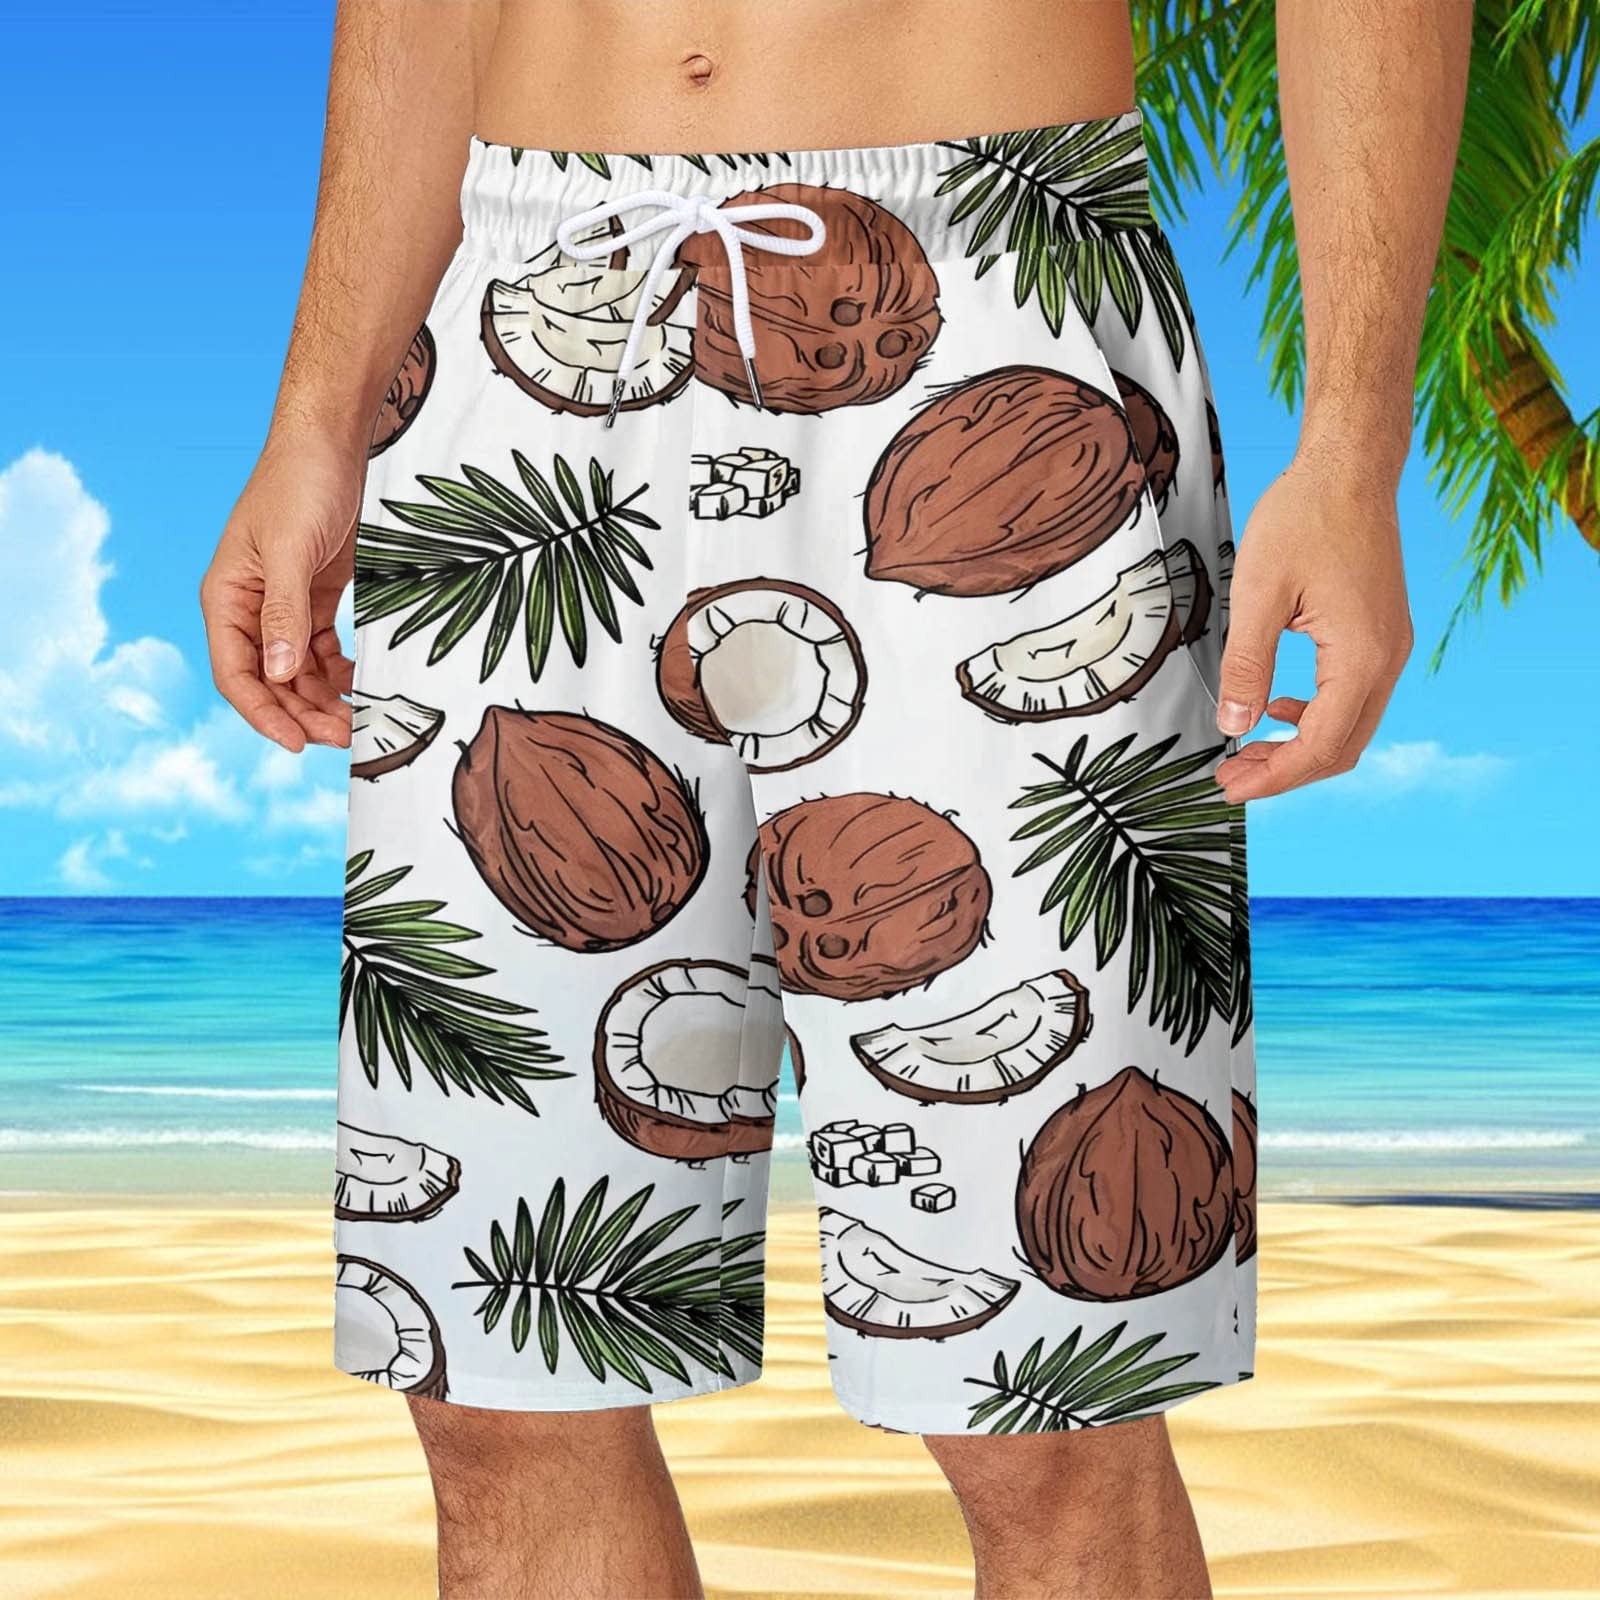 VSSSJ Hawaiian Shorts for Men Big and Tall Colorful Plaid Printed Elastic  Waistband Drawstring Five Point Pockets Swim Trunks Summer Seaside Beach